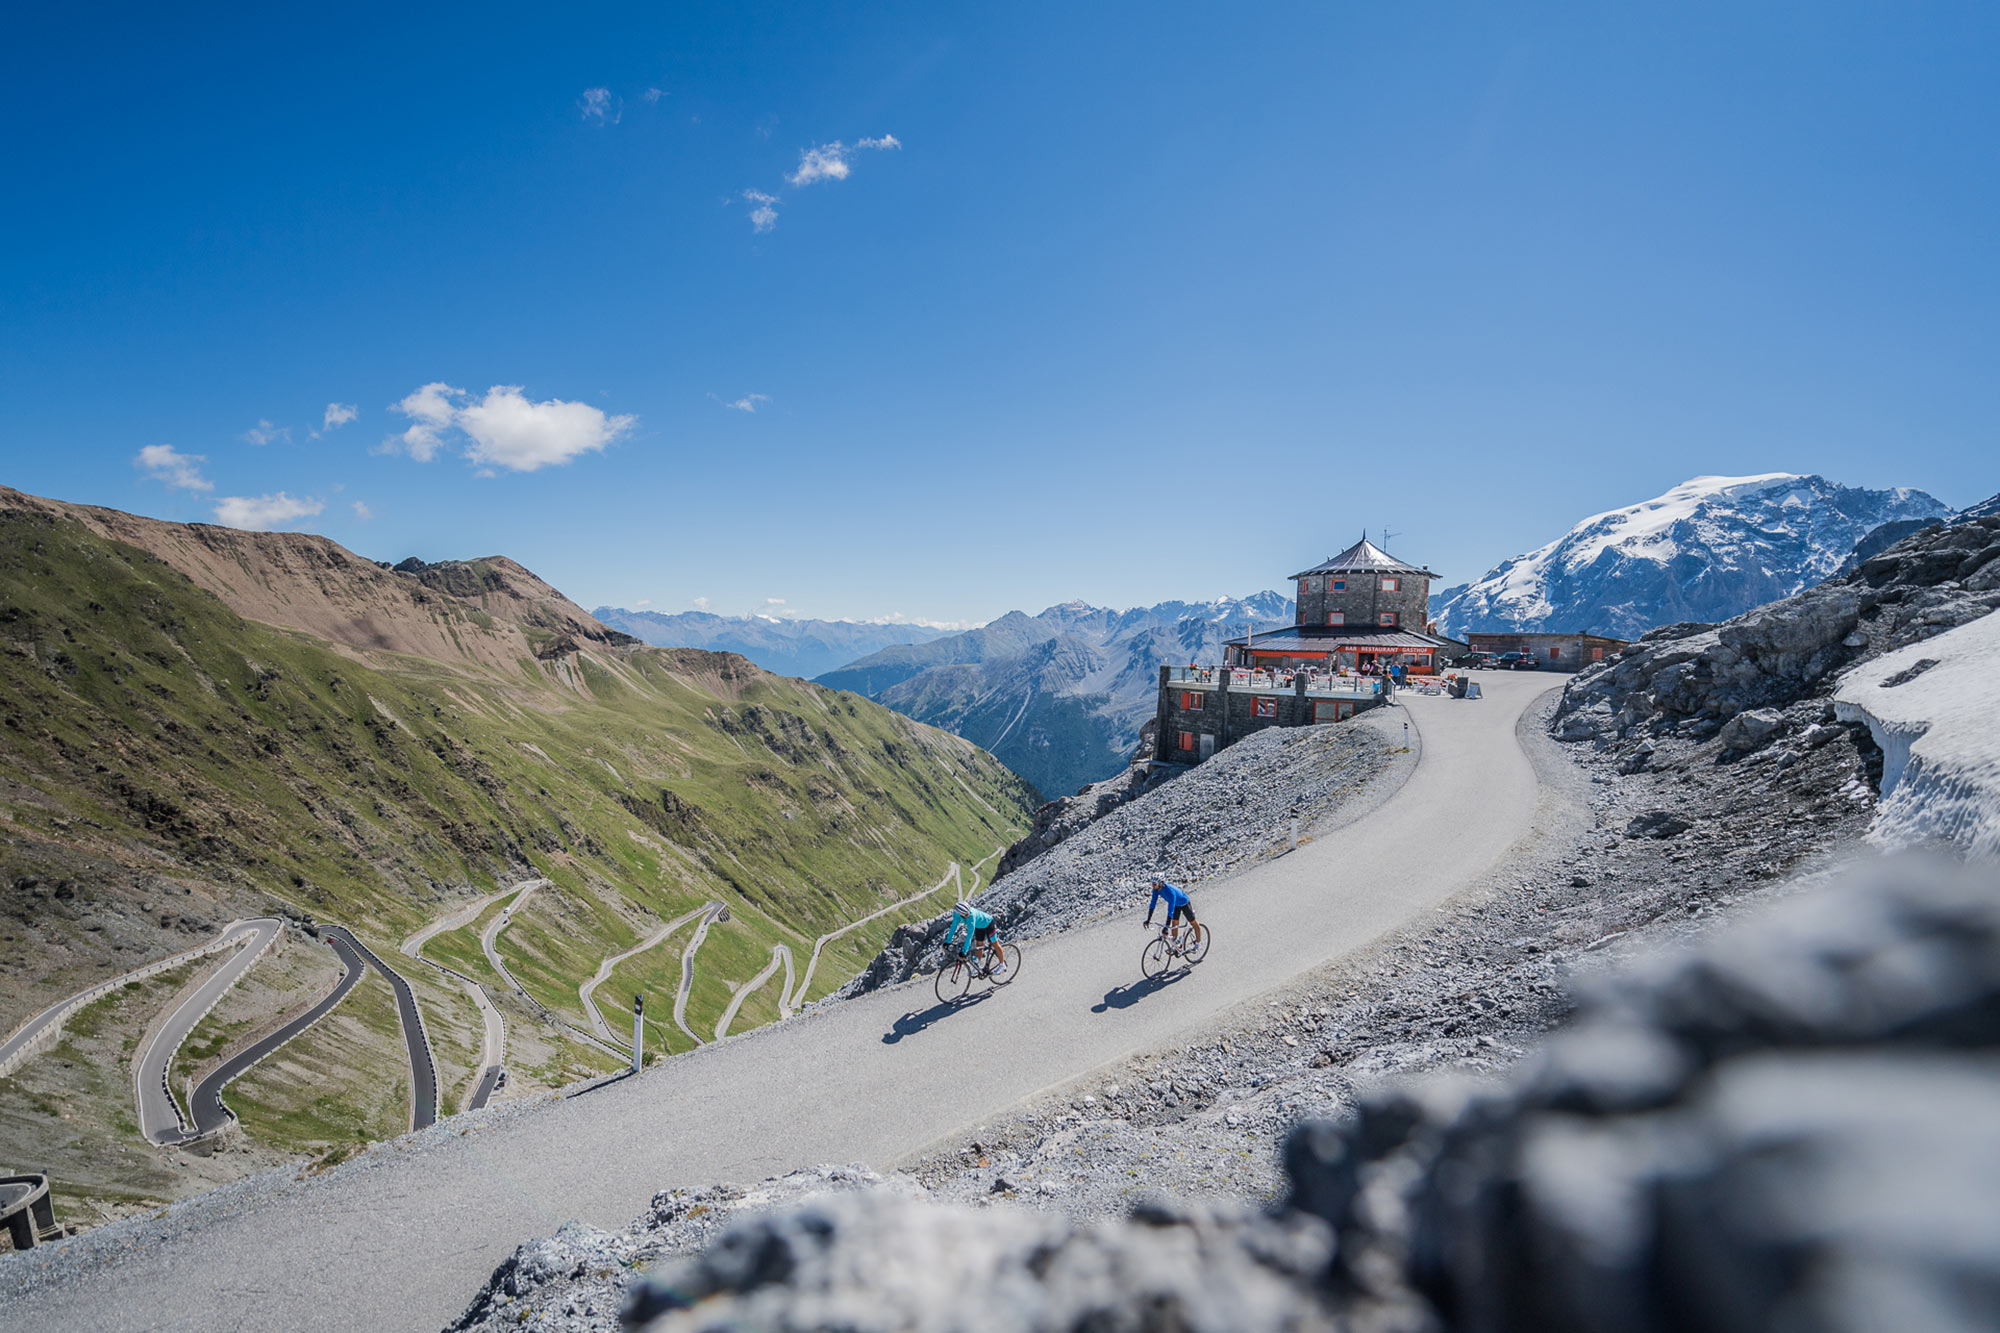 Cycling day on the Stelvio Pass - Alpine guesthouse Tibet Hut